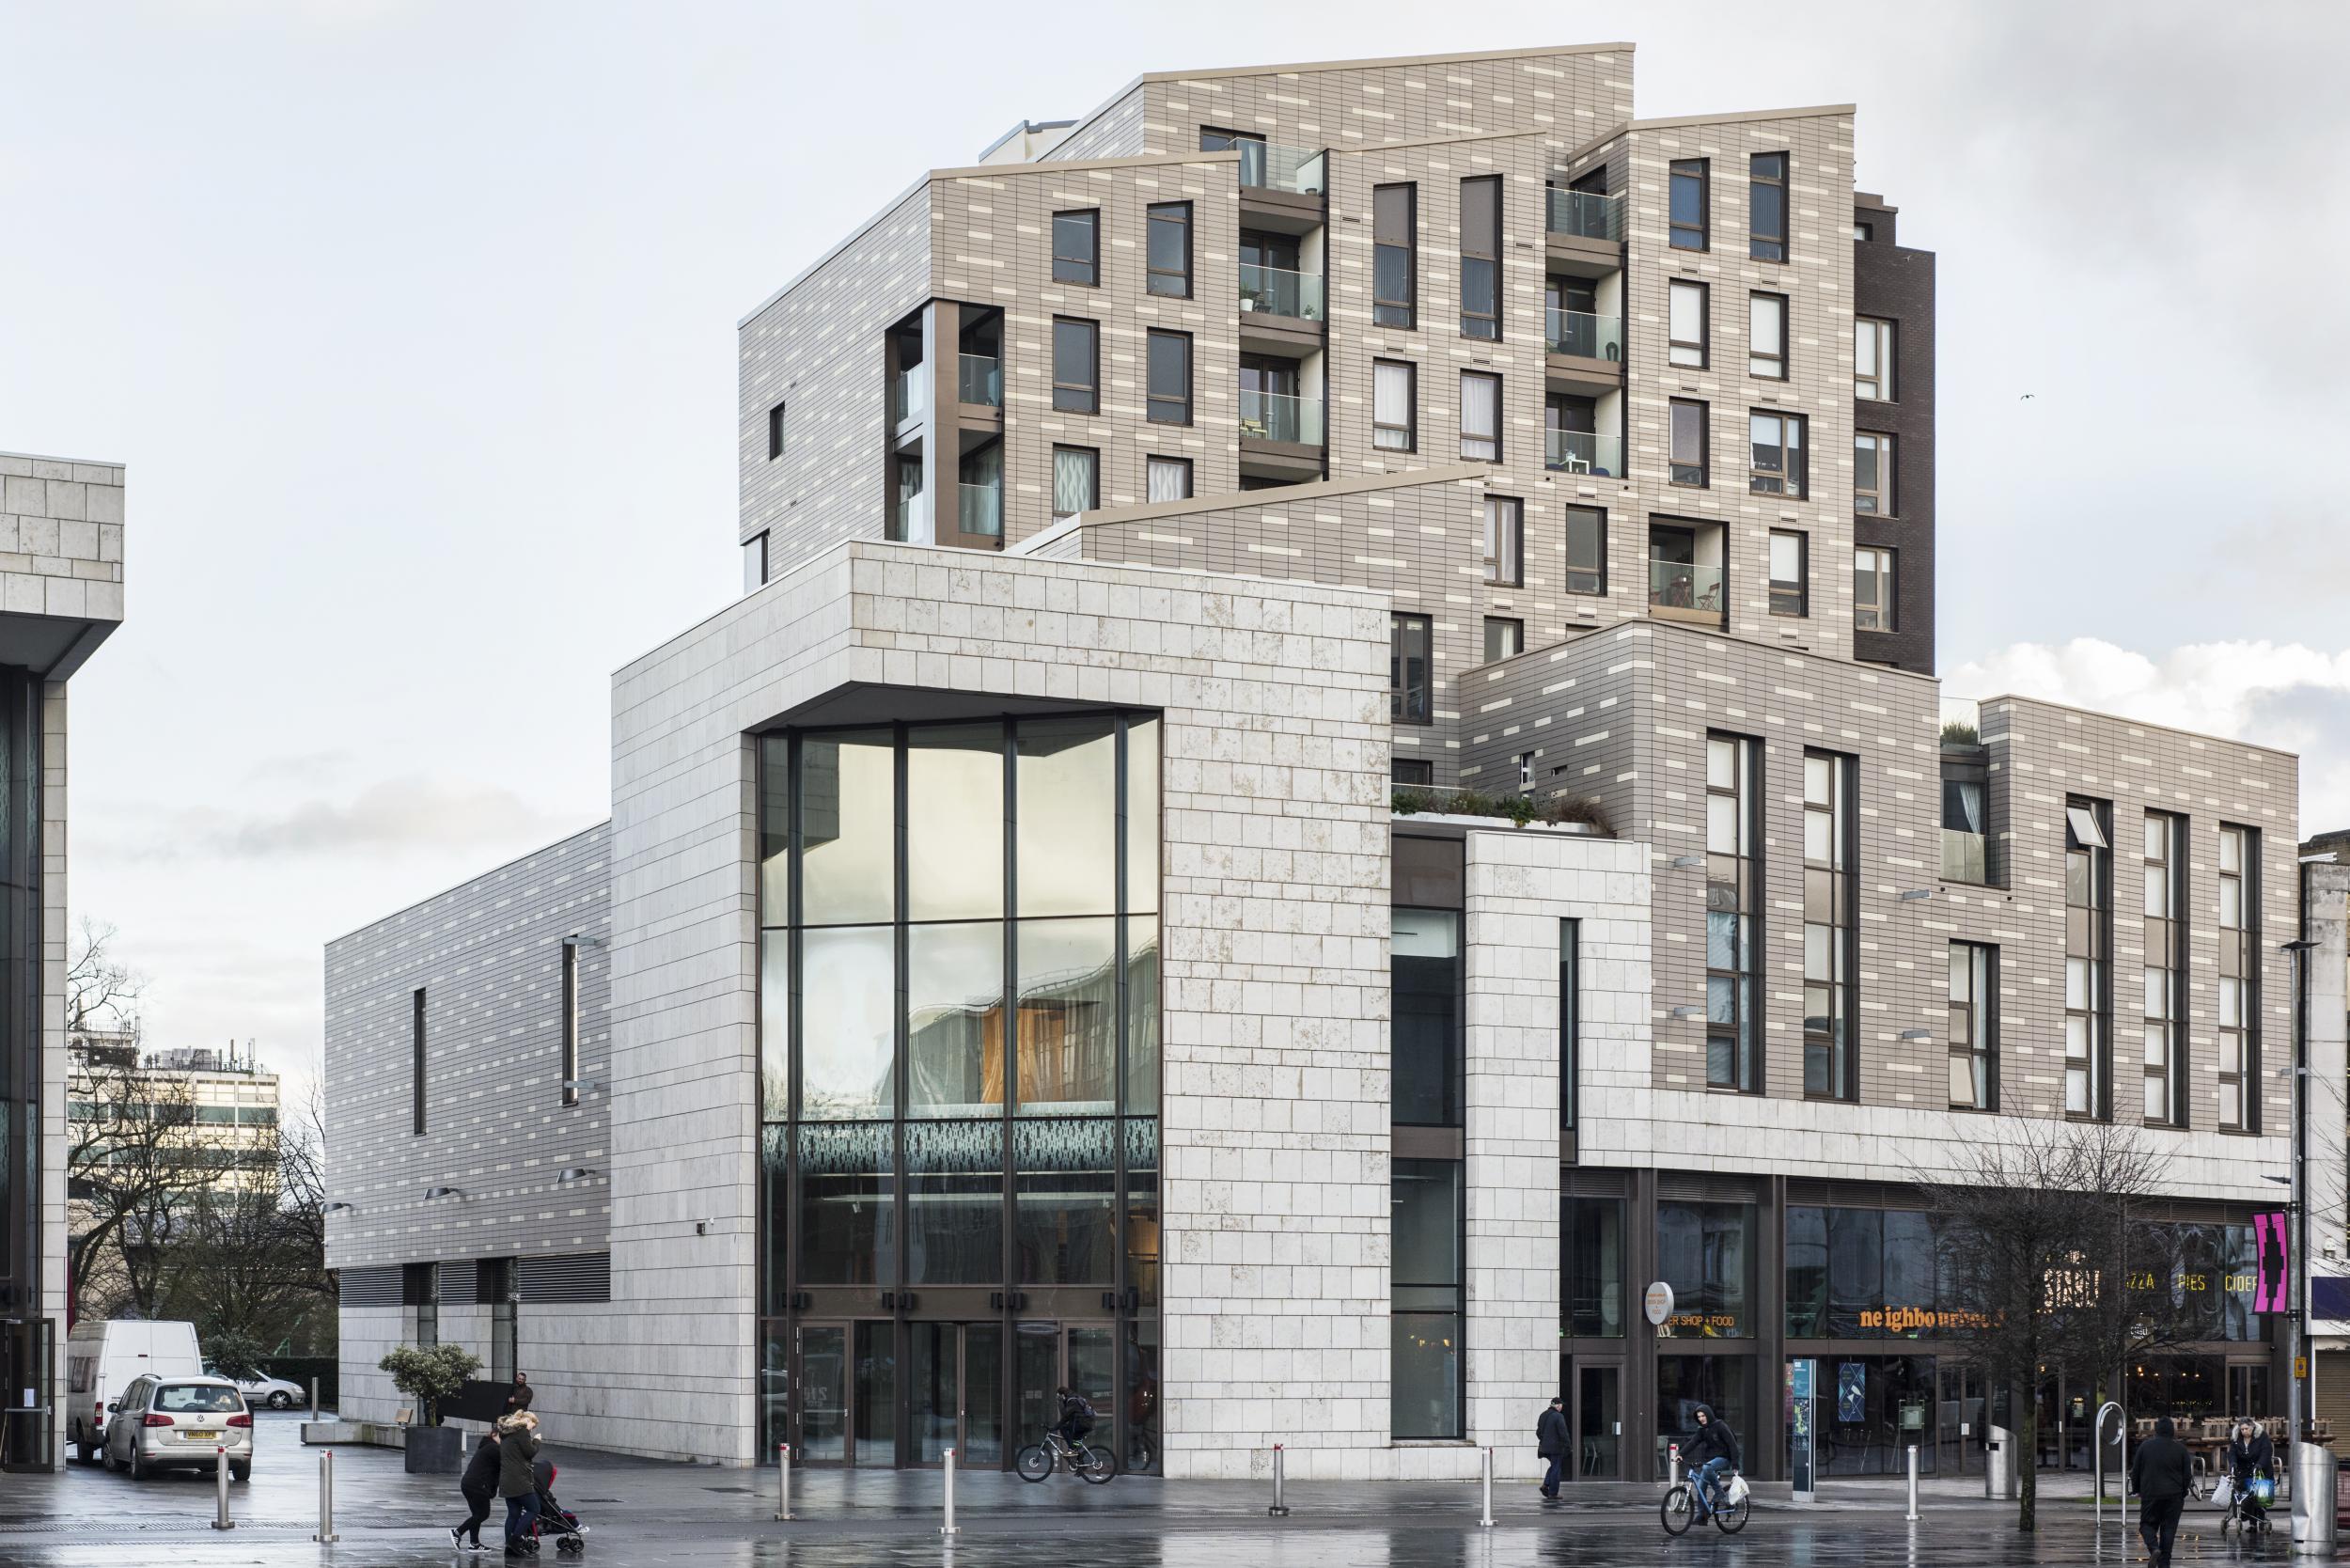 The John Hansard Gallery reopens in May